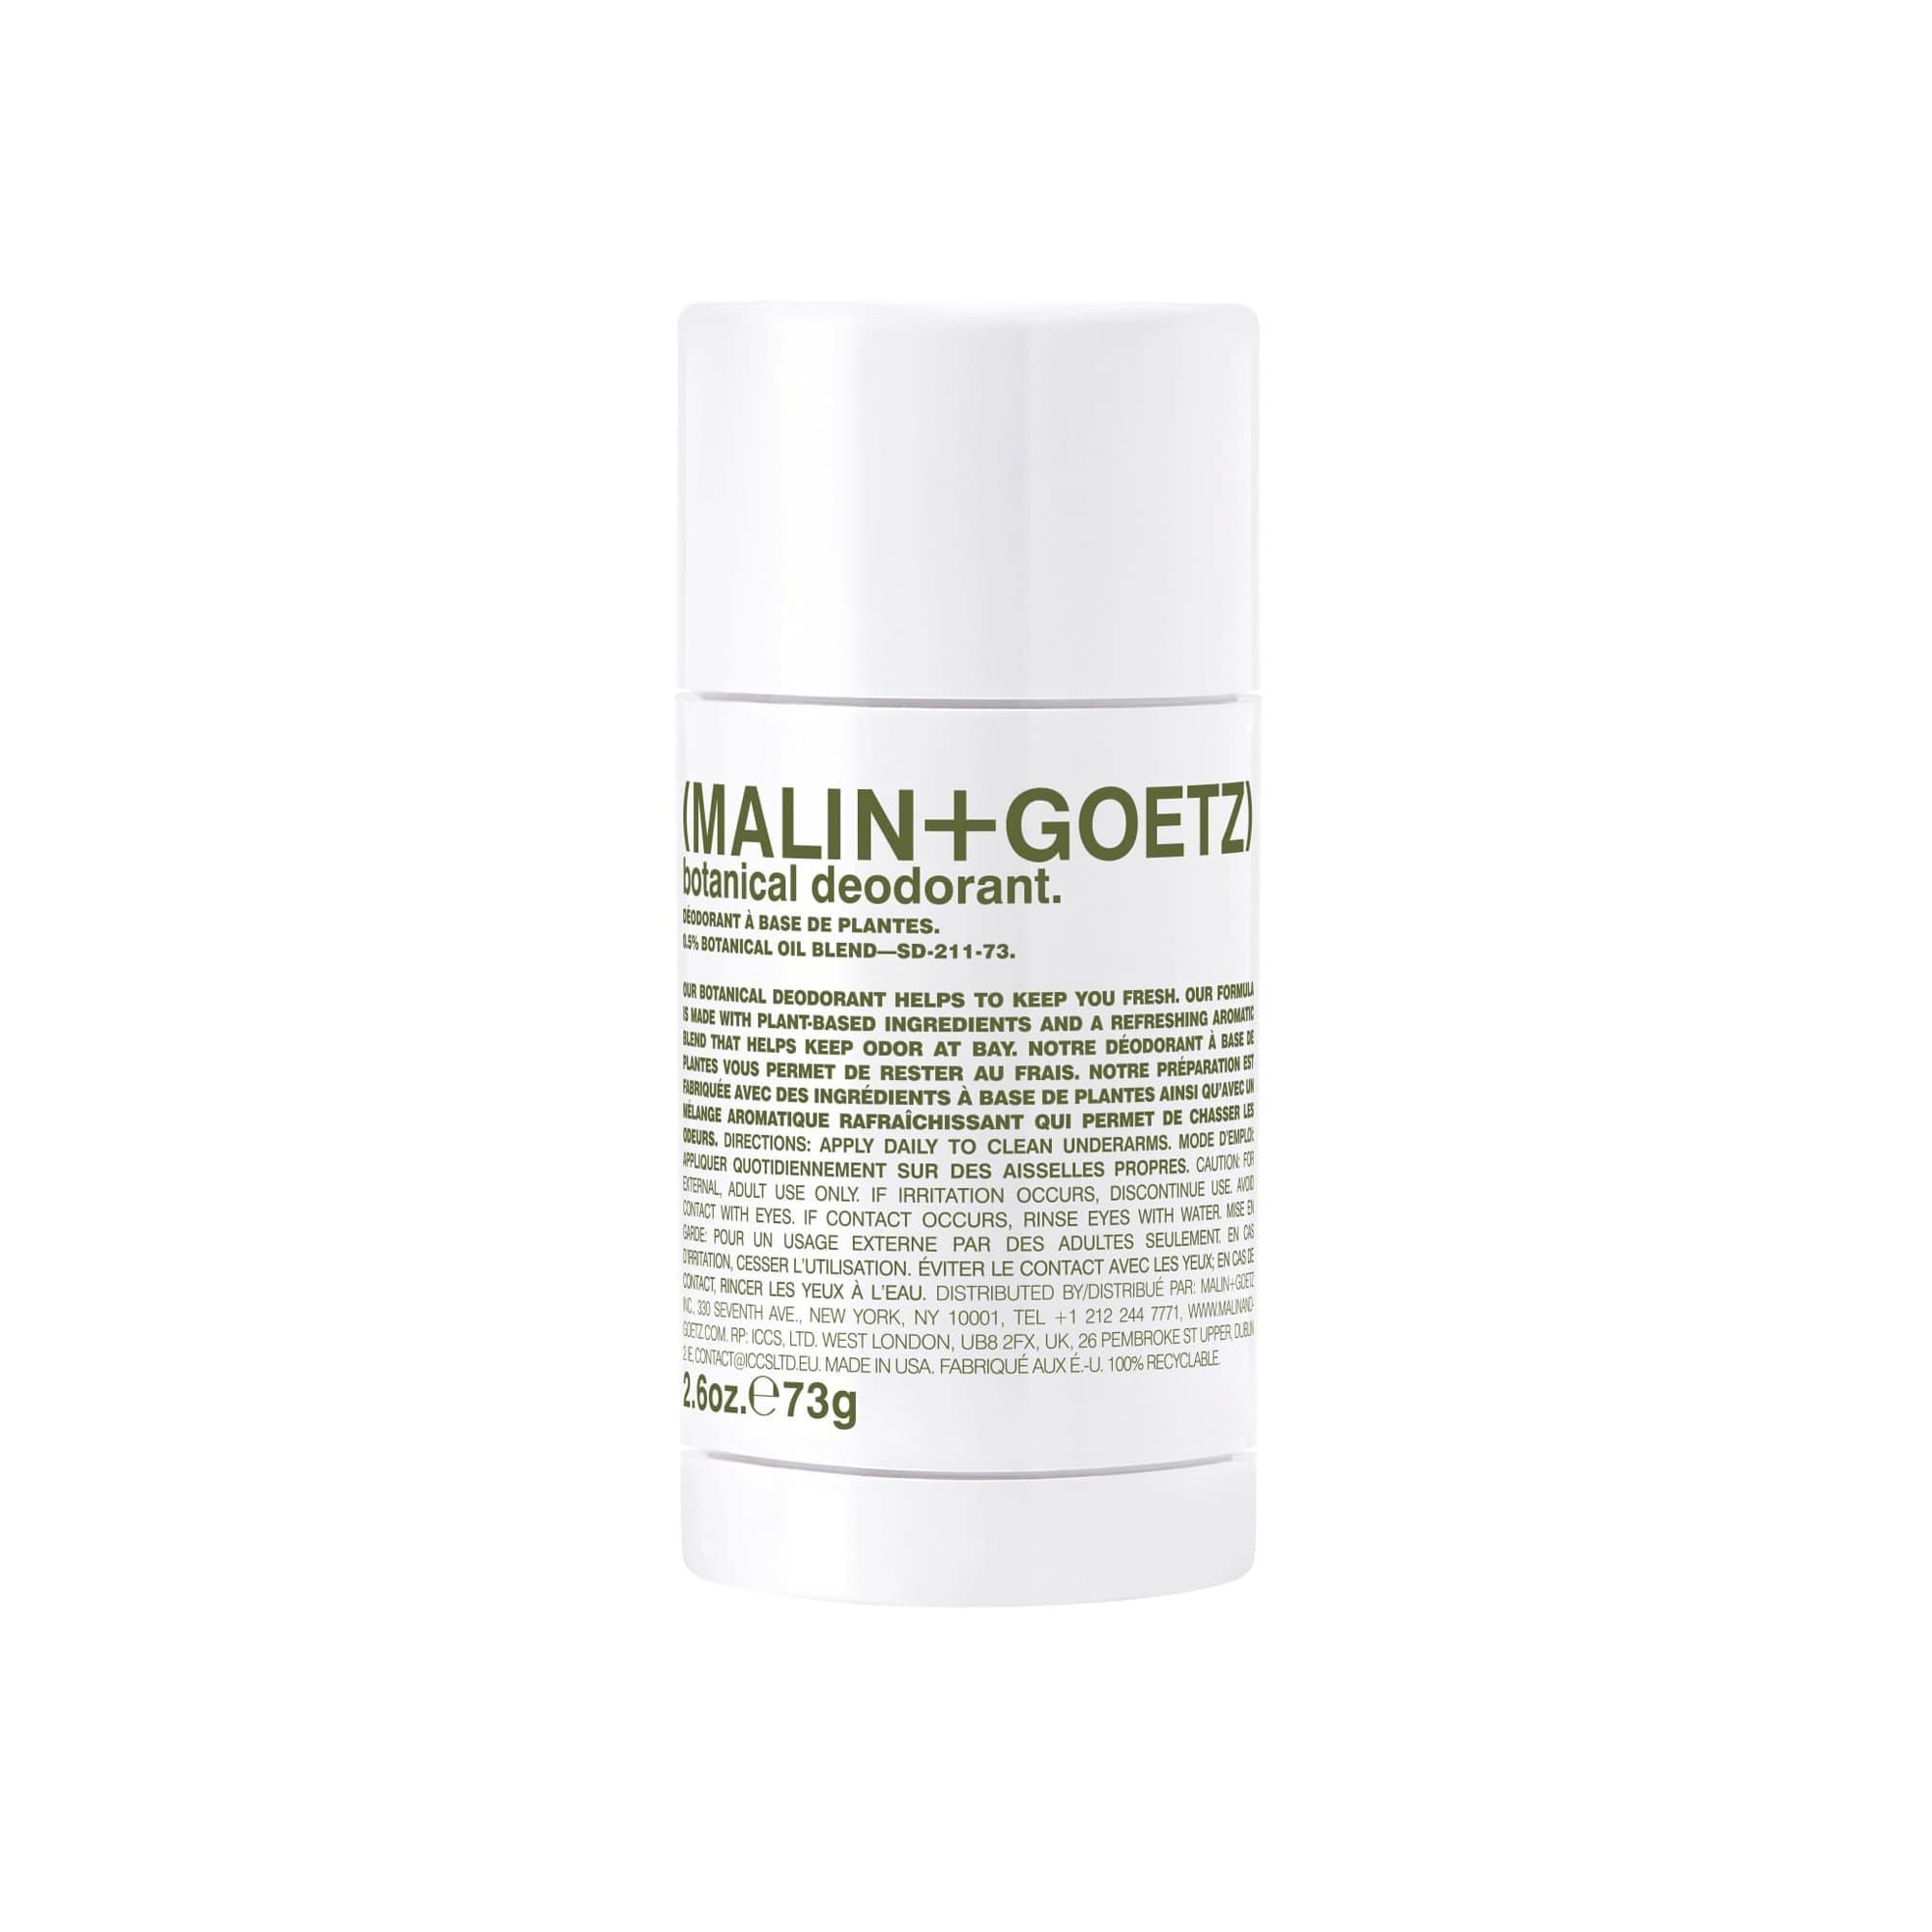 Botanical Blend Deodorant de (MALIN+GOETZ) Desodorante infusionado